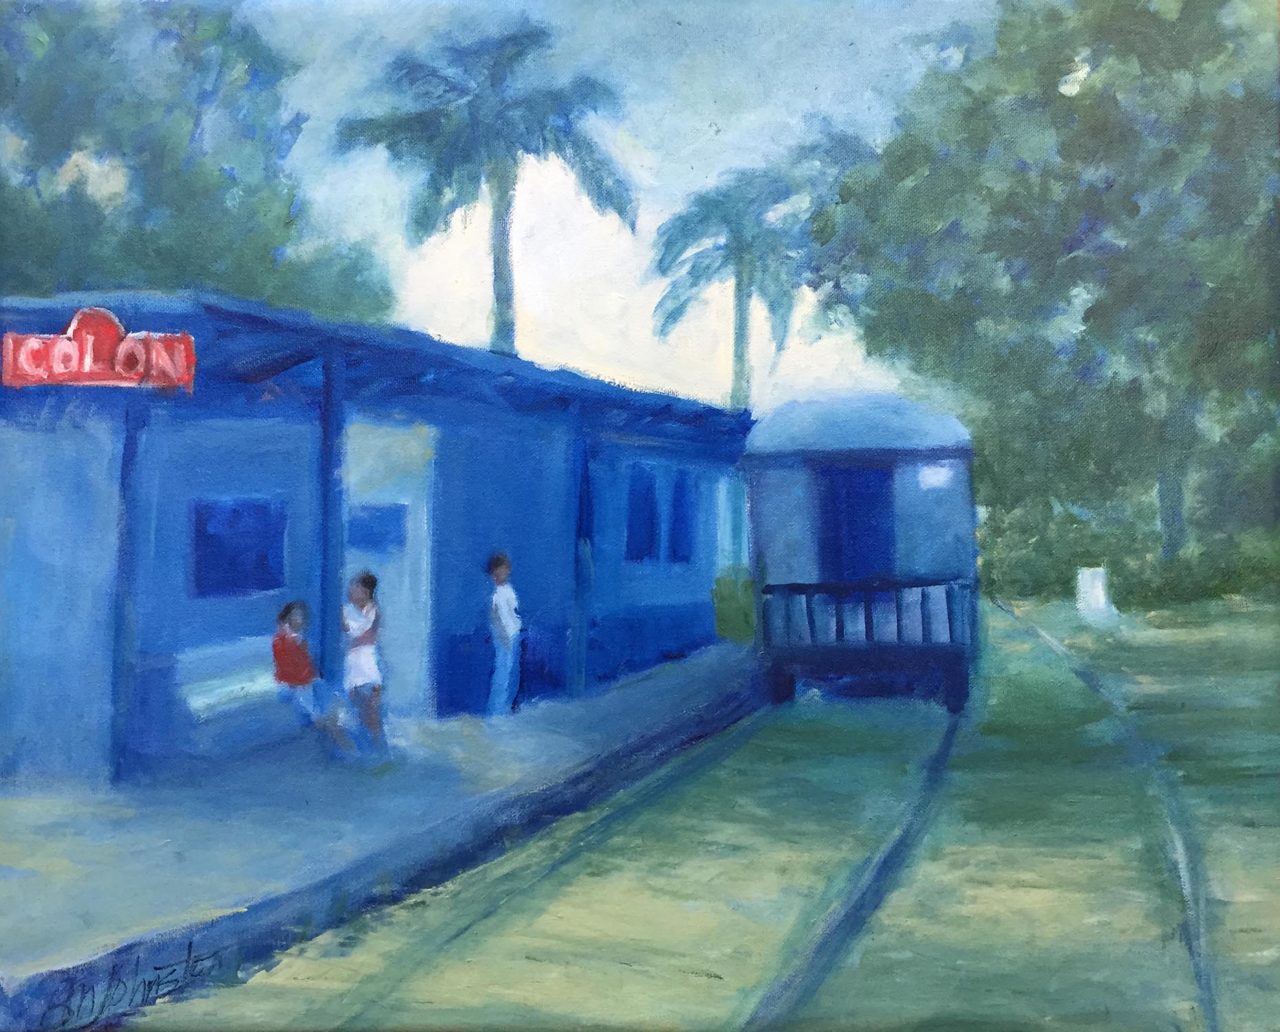 Colon Station Blues - Brian M. Johnston - North American Impressionist artist - oil on canvas - 16" x 20" - US$. 1350.